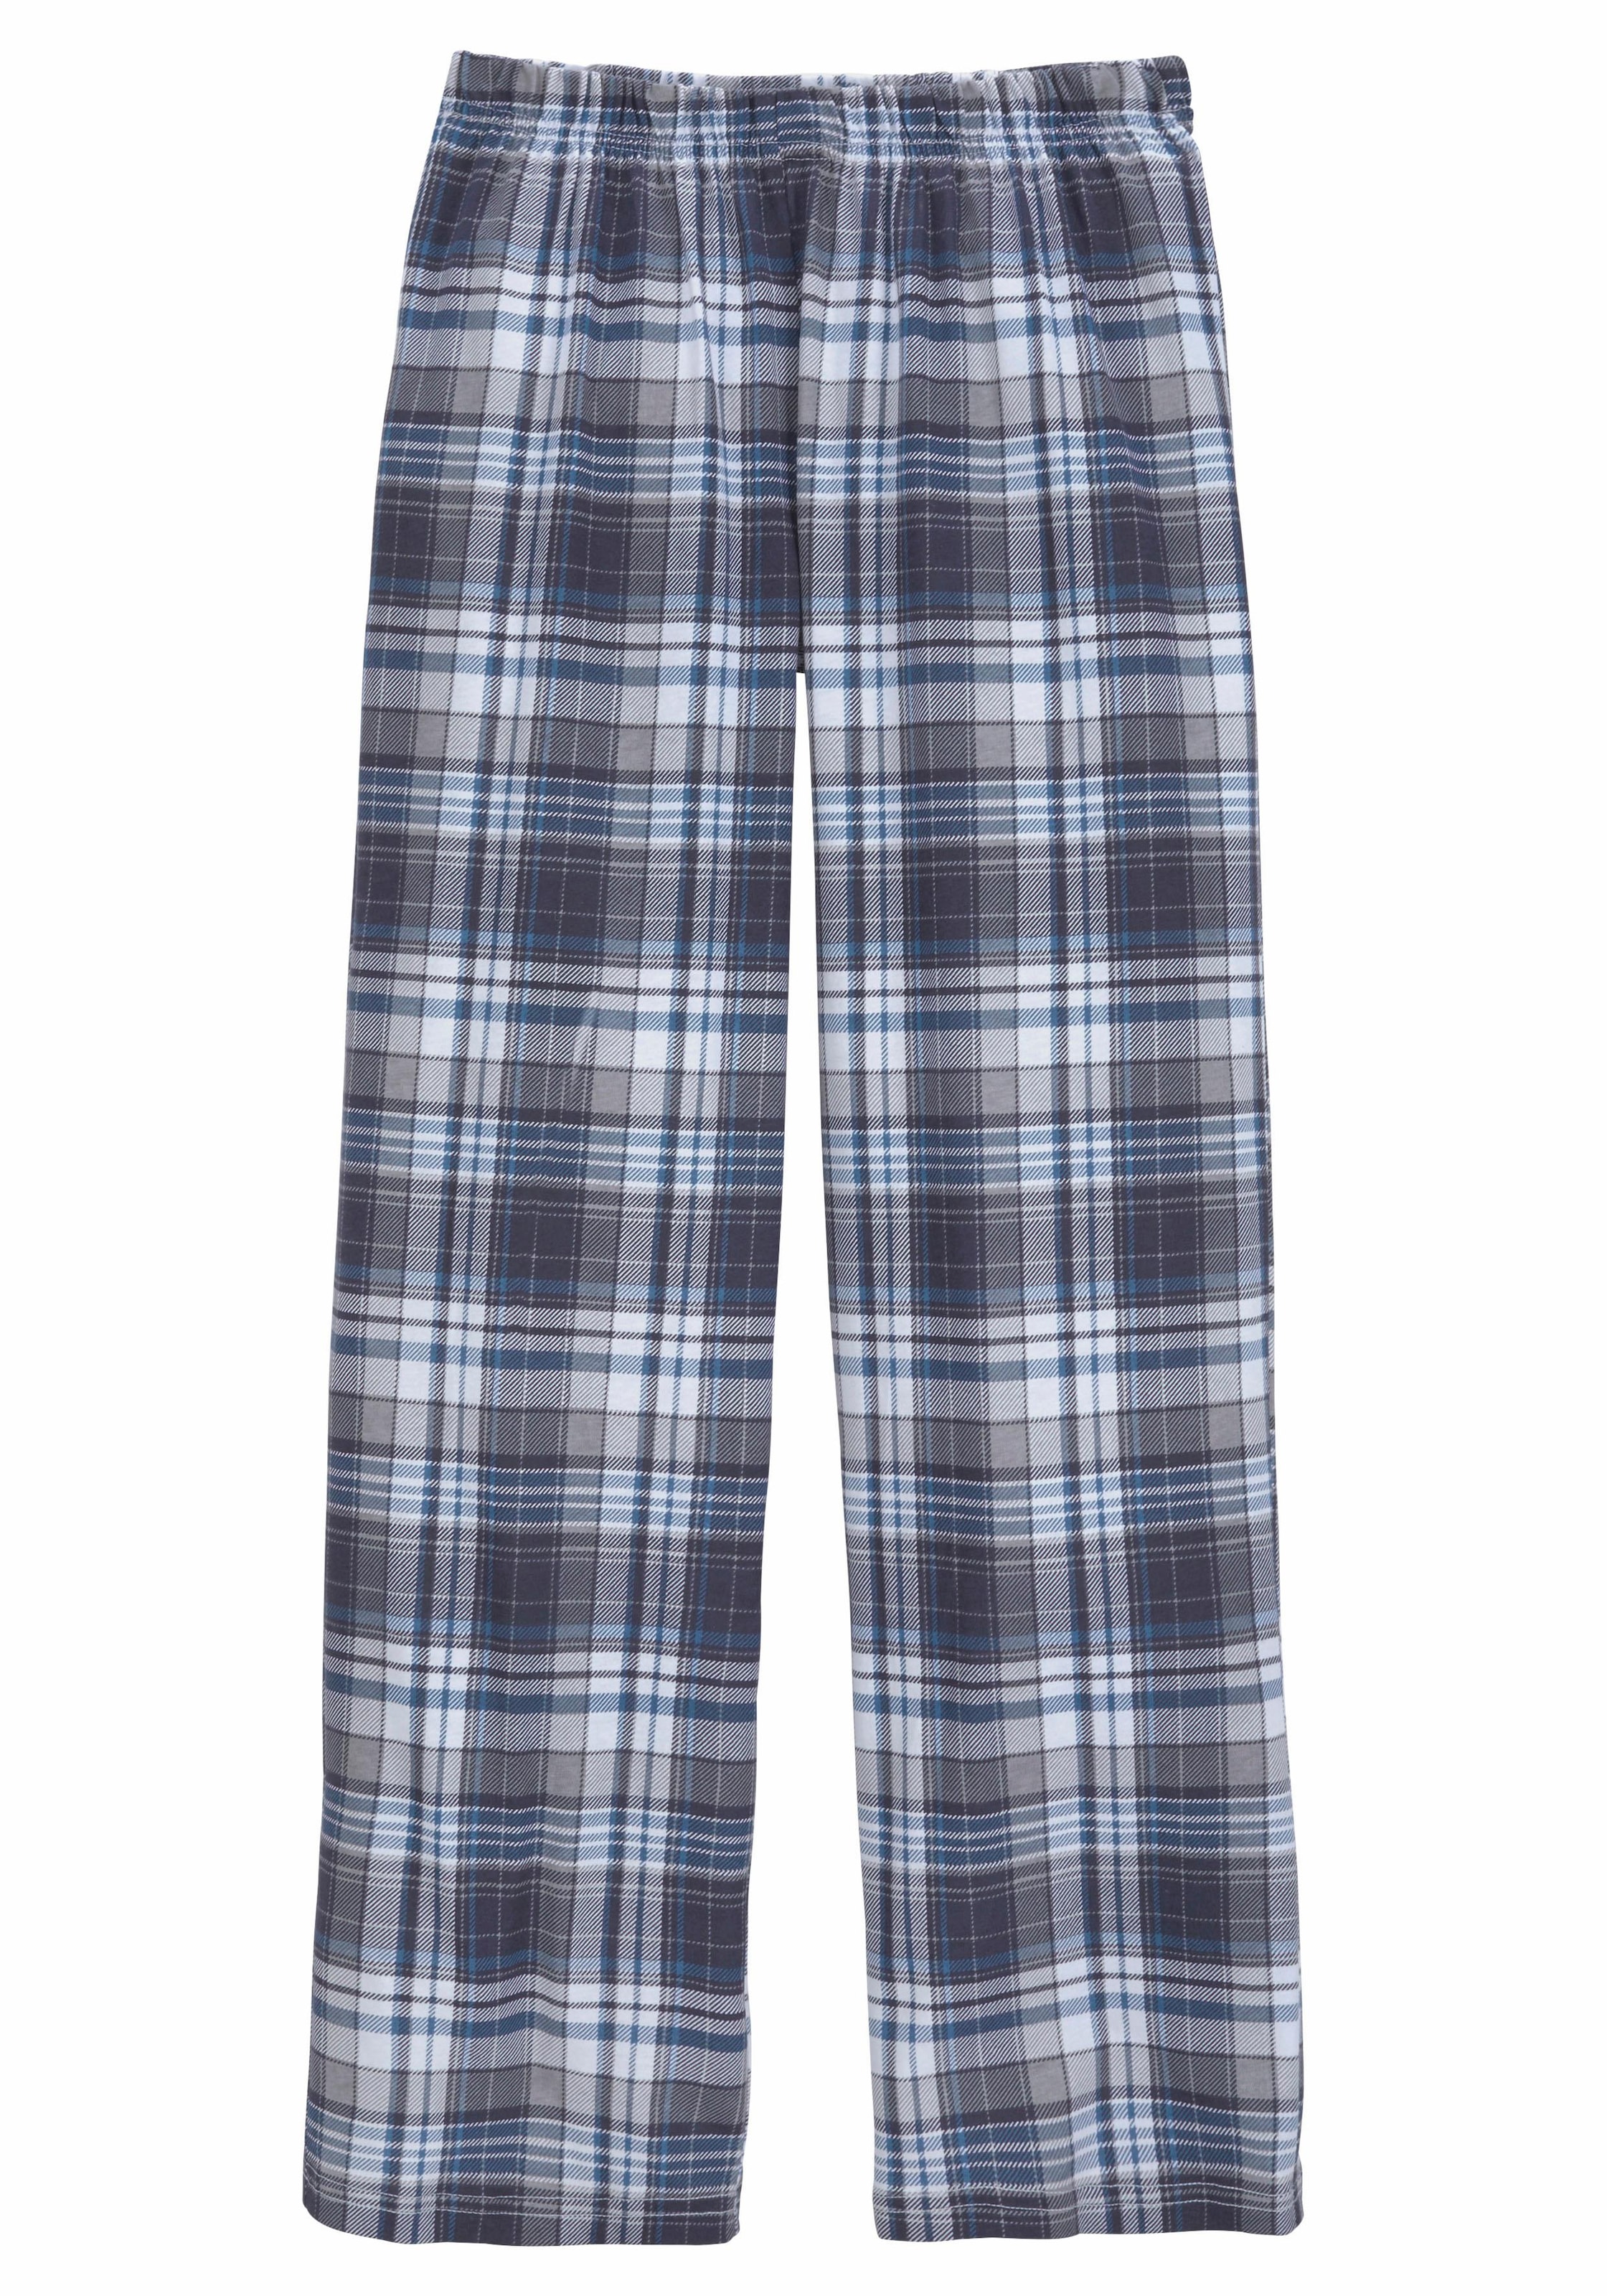 le jogger® Pyjama, (Packung, 4 tlg., 2 Stück), in langer Form, Hose 1x uni  und 1x kariert bei